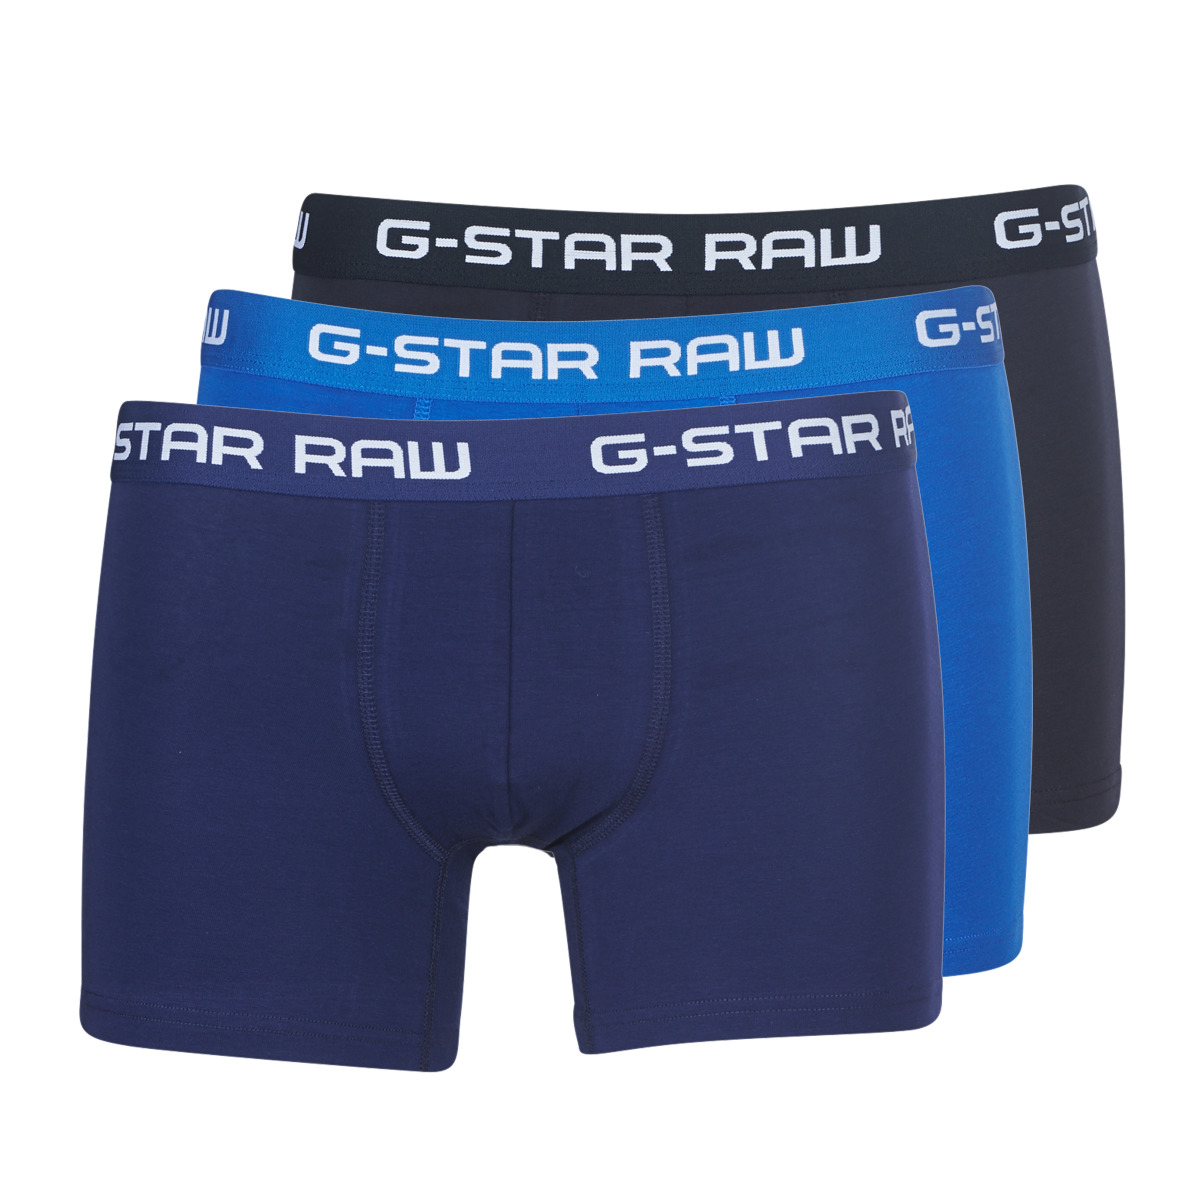 G-Star Raw Noir / Marine / Bleu CLASSIC TRUNK CLR 3 PAC